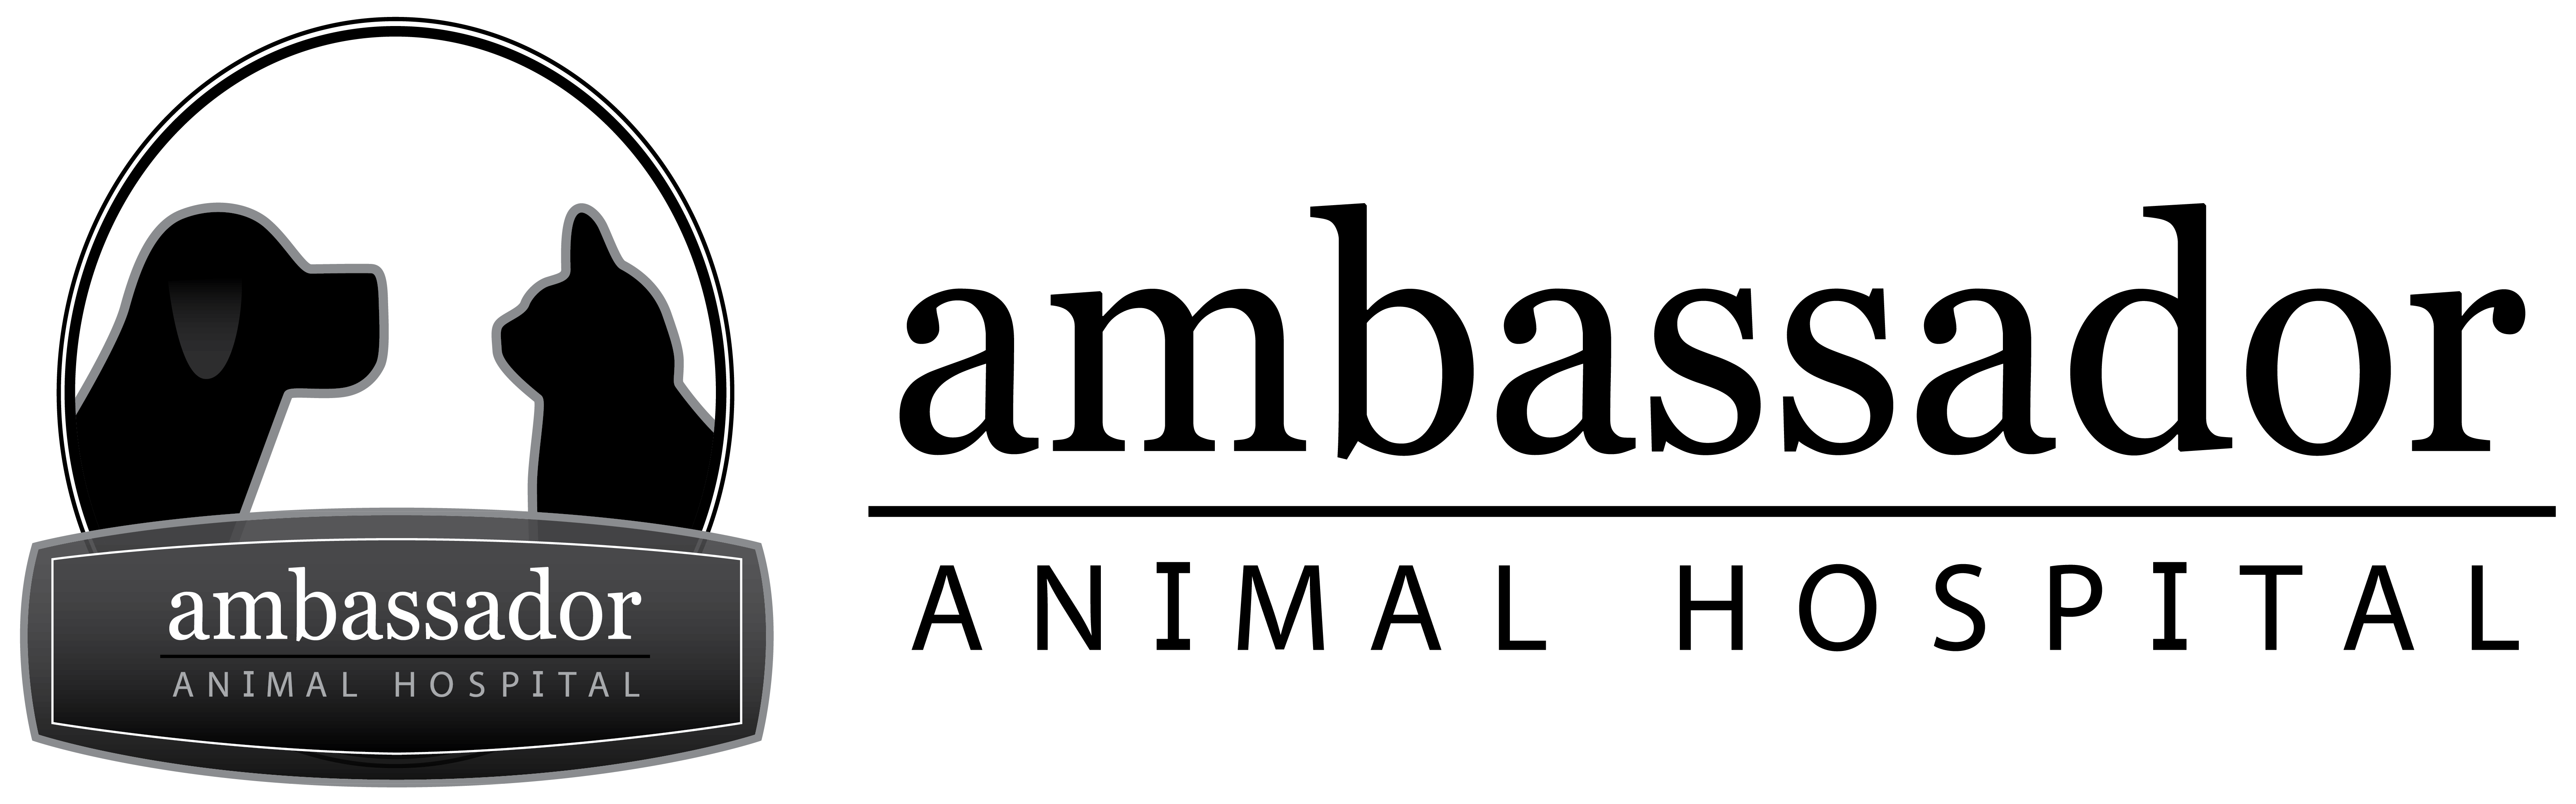 Ambassador Animal Hospital: Veterinarian in Windsor, Ontario